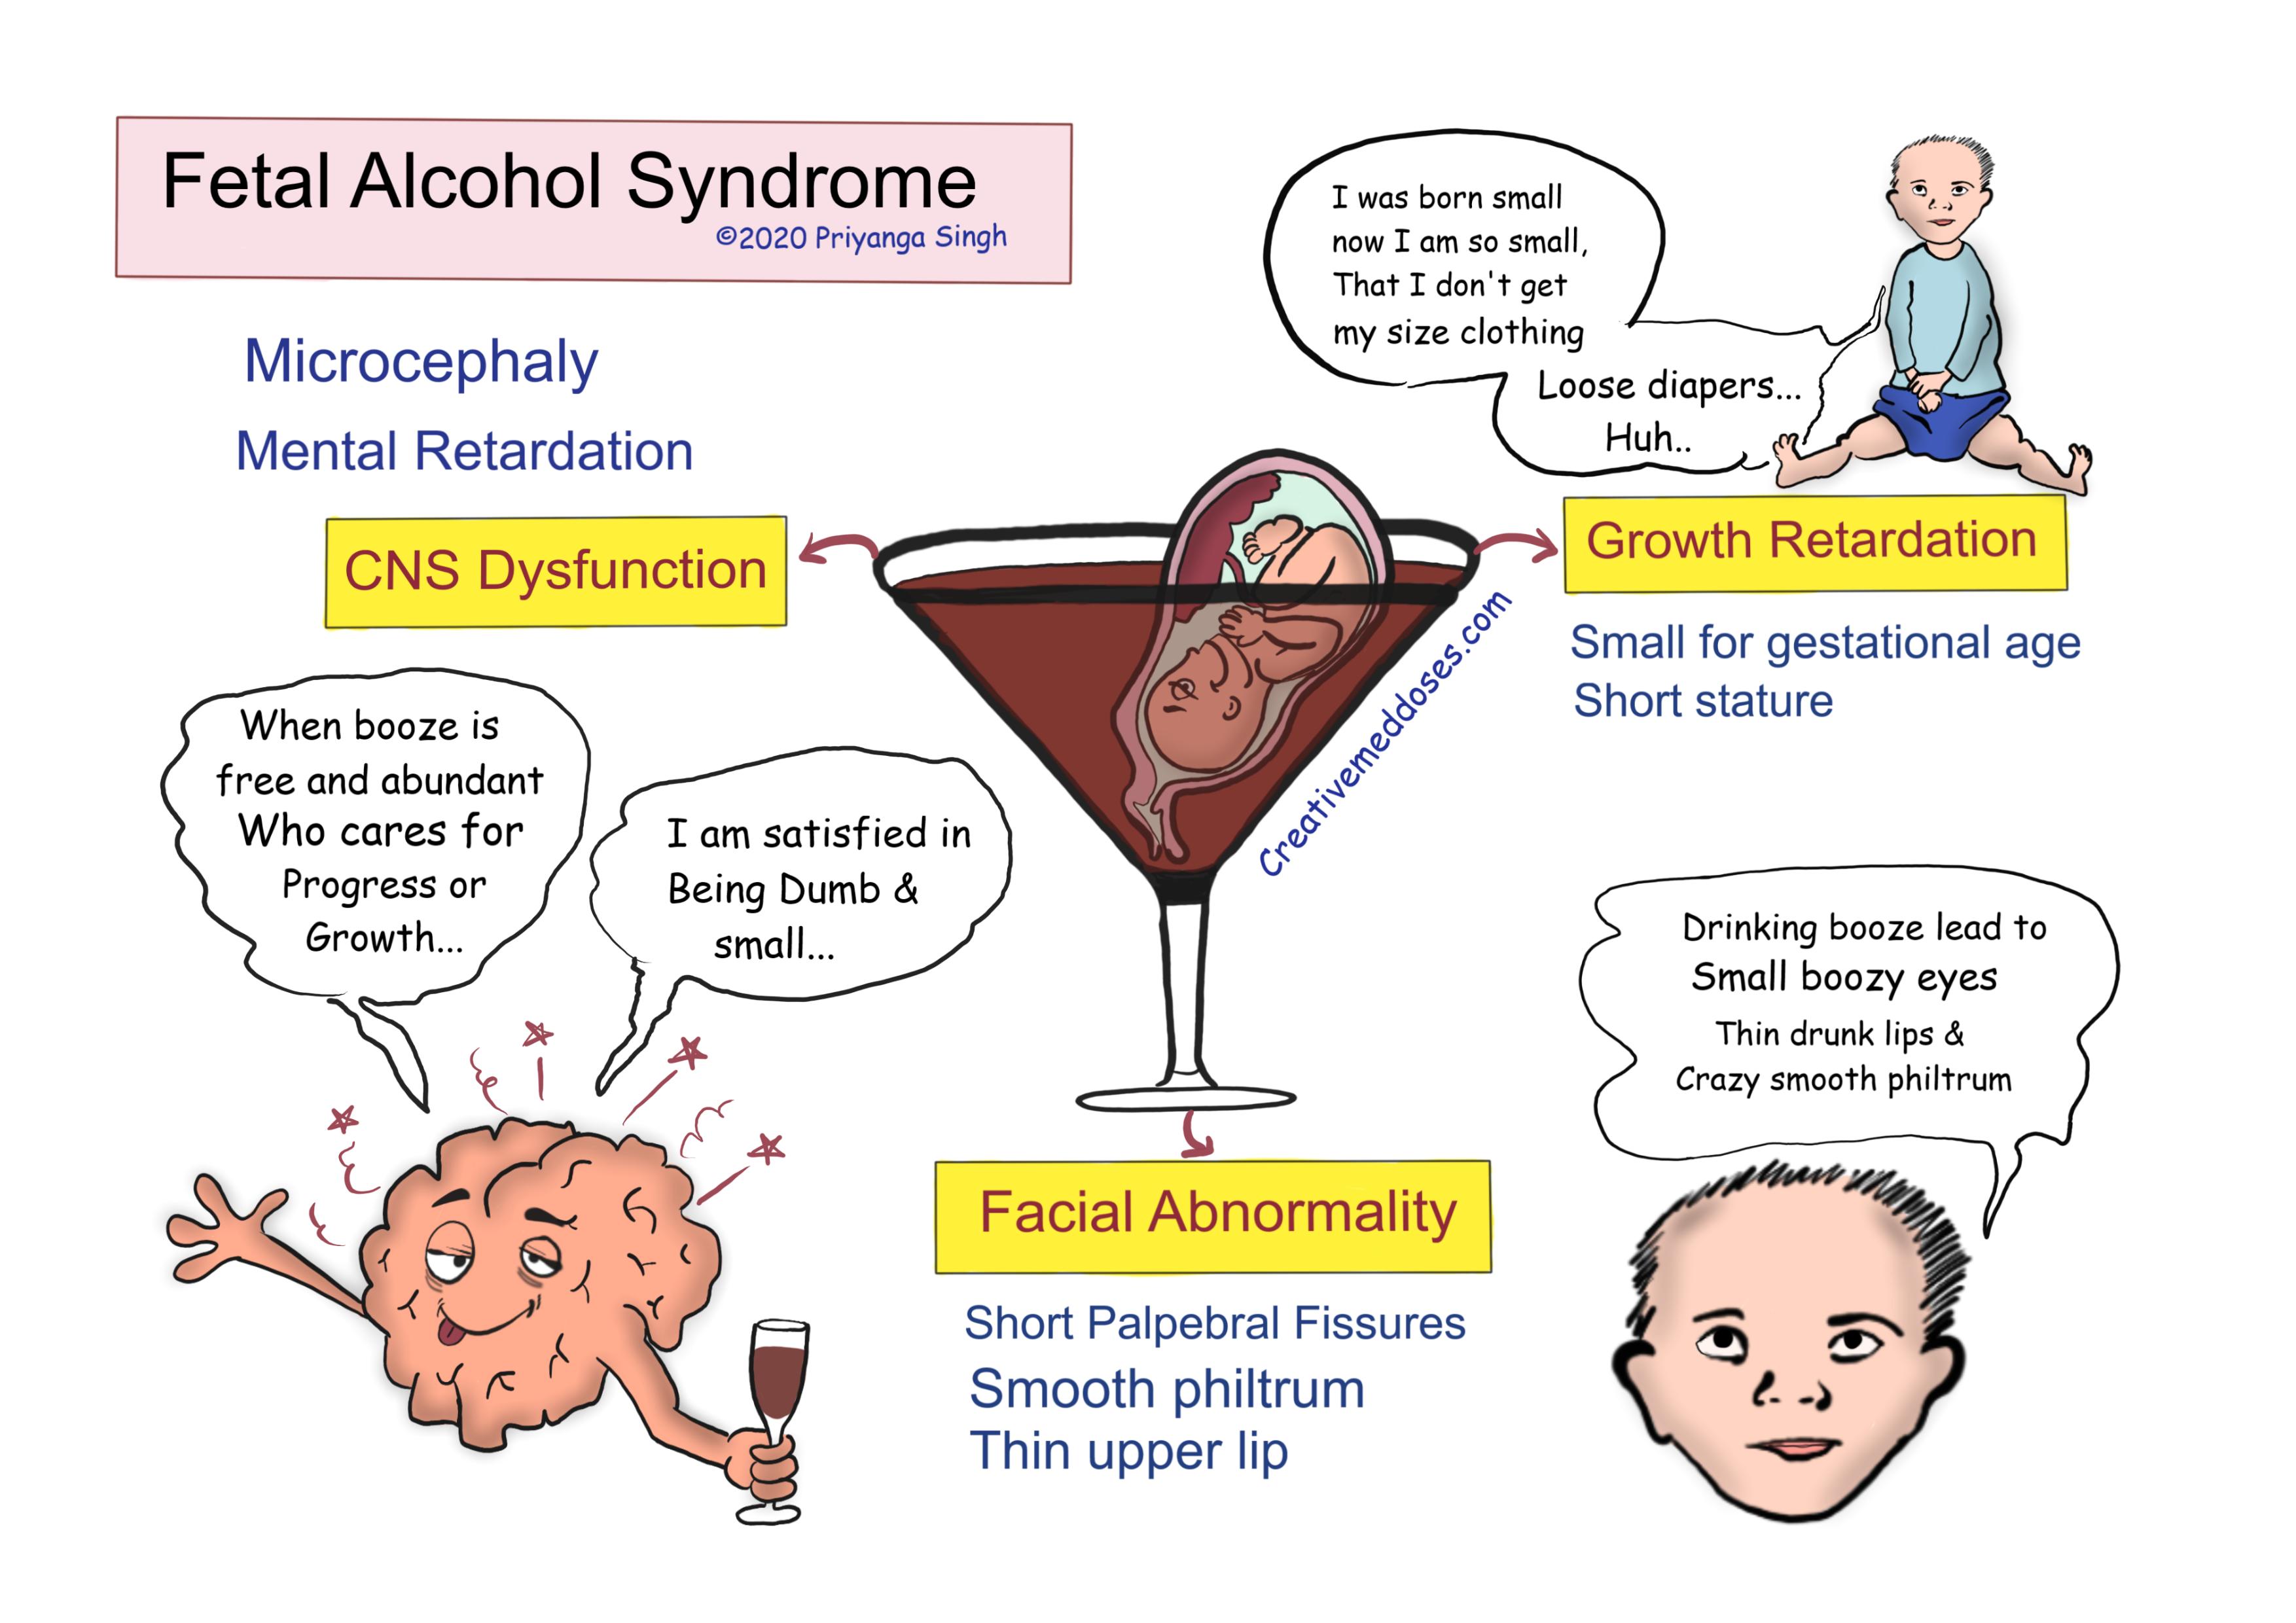 Fetal Alcohol Syndrome Photo